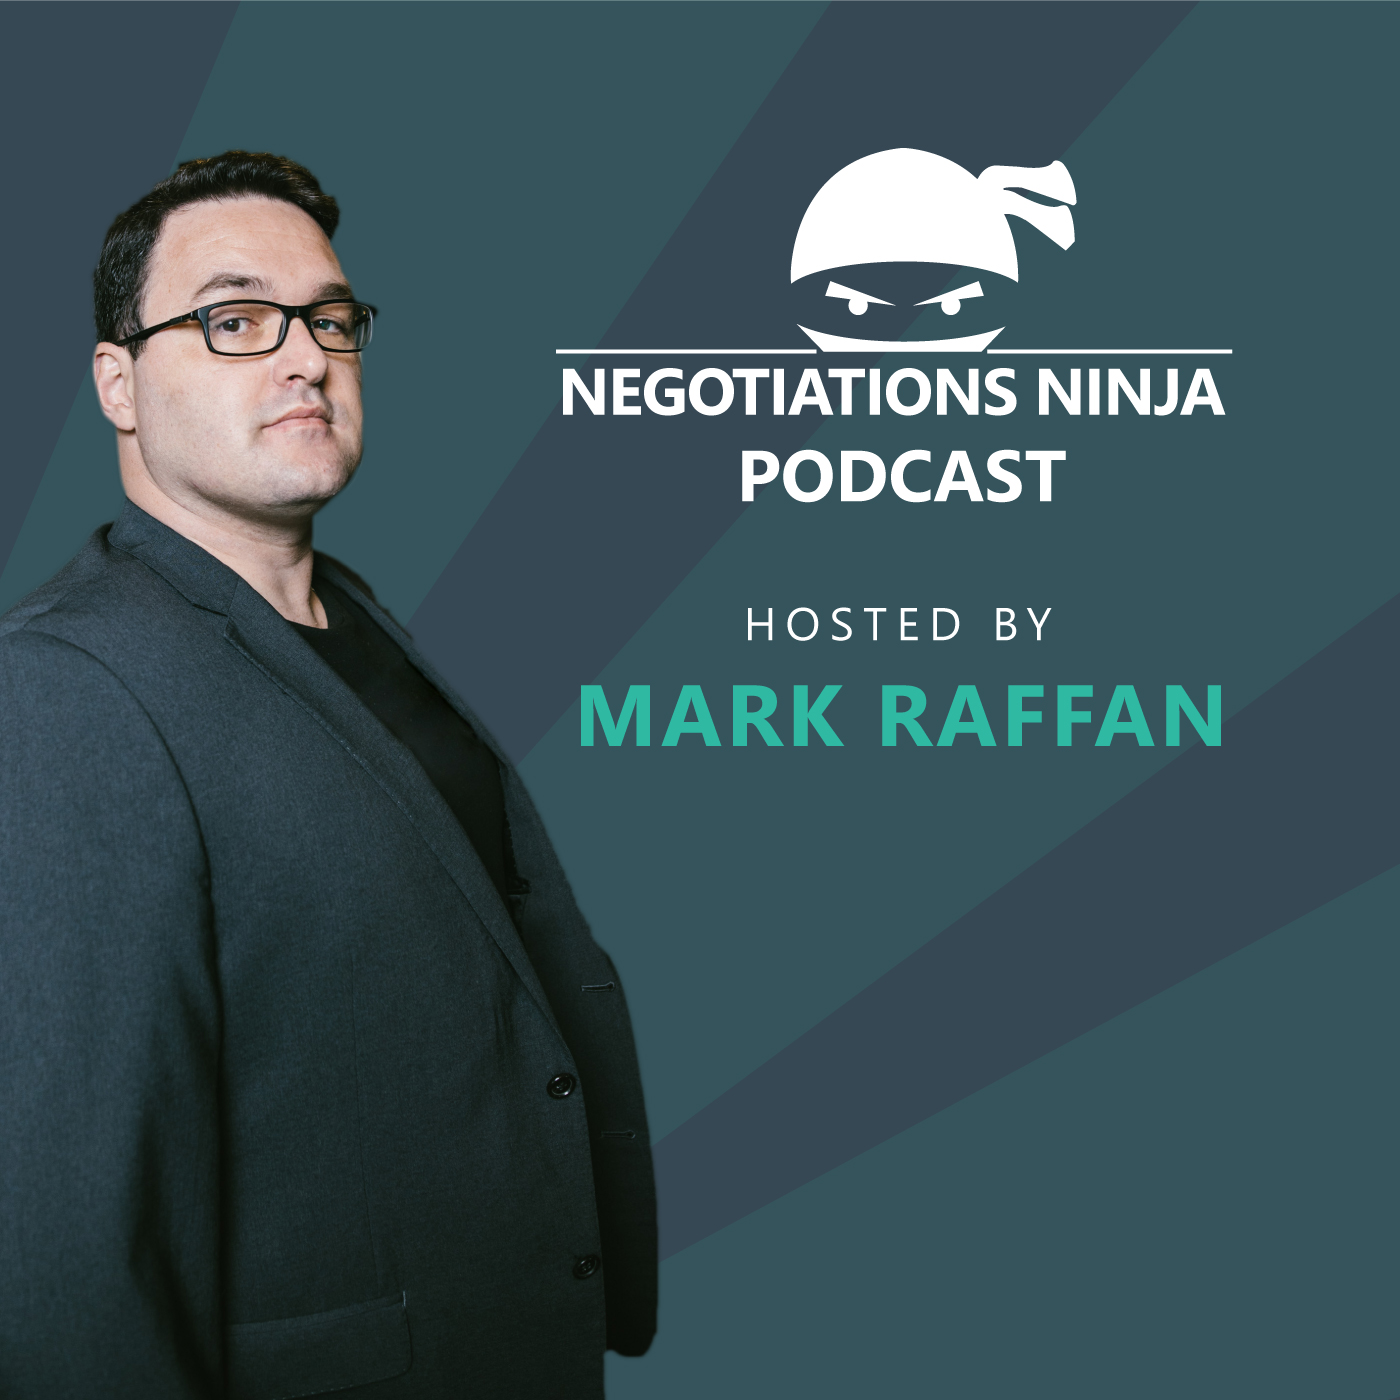 Negotiations Ninja Podcast podcast show image